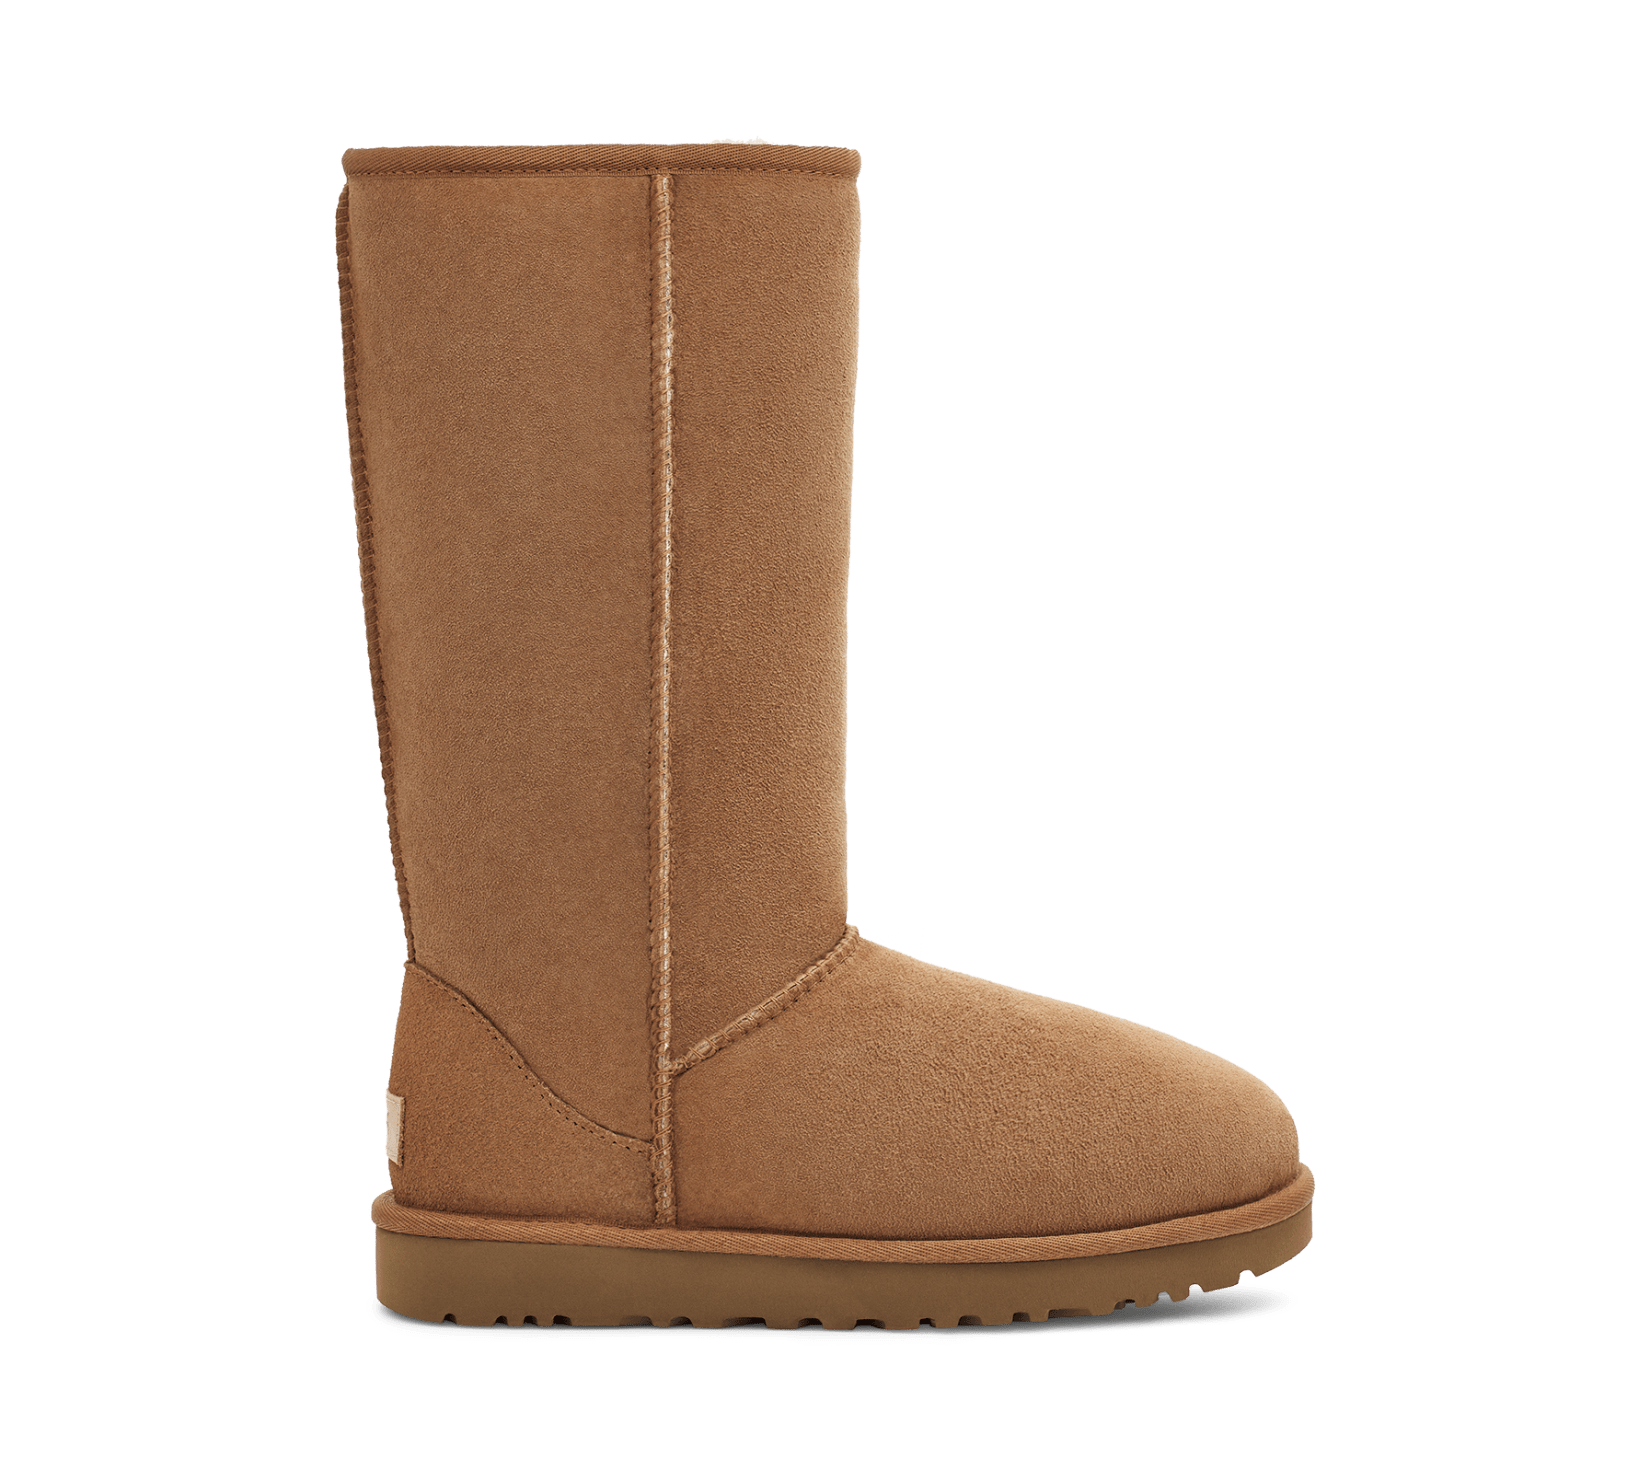 Wool Sheepskin Insoles Pads Replacement for UGG Boots/EMU/RainBoots Women  Men | eBay